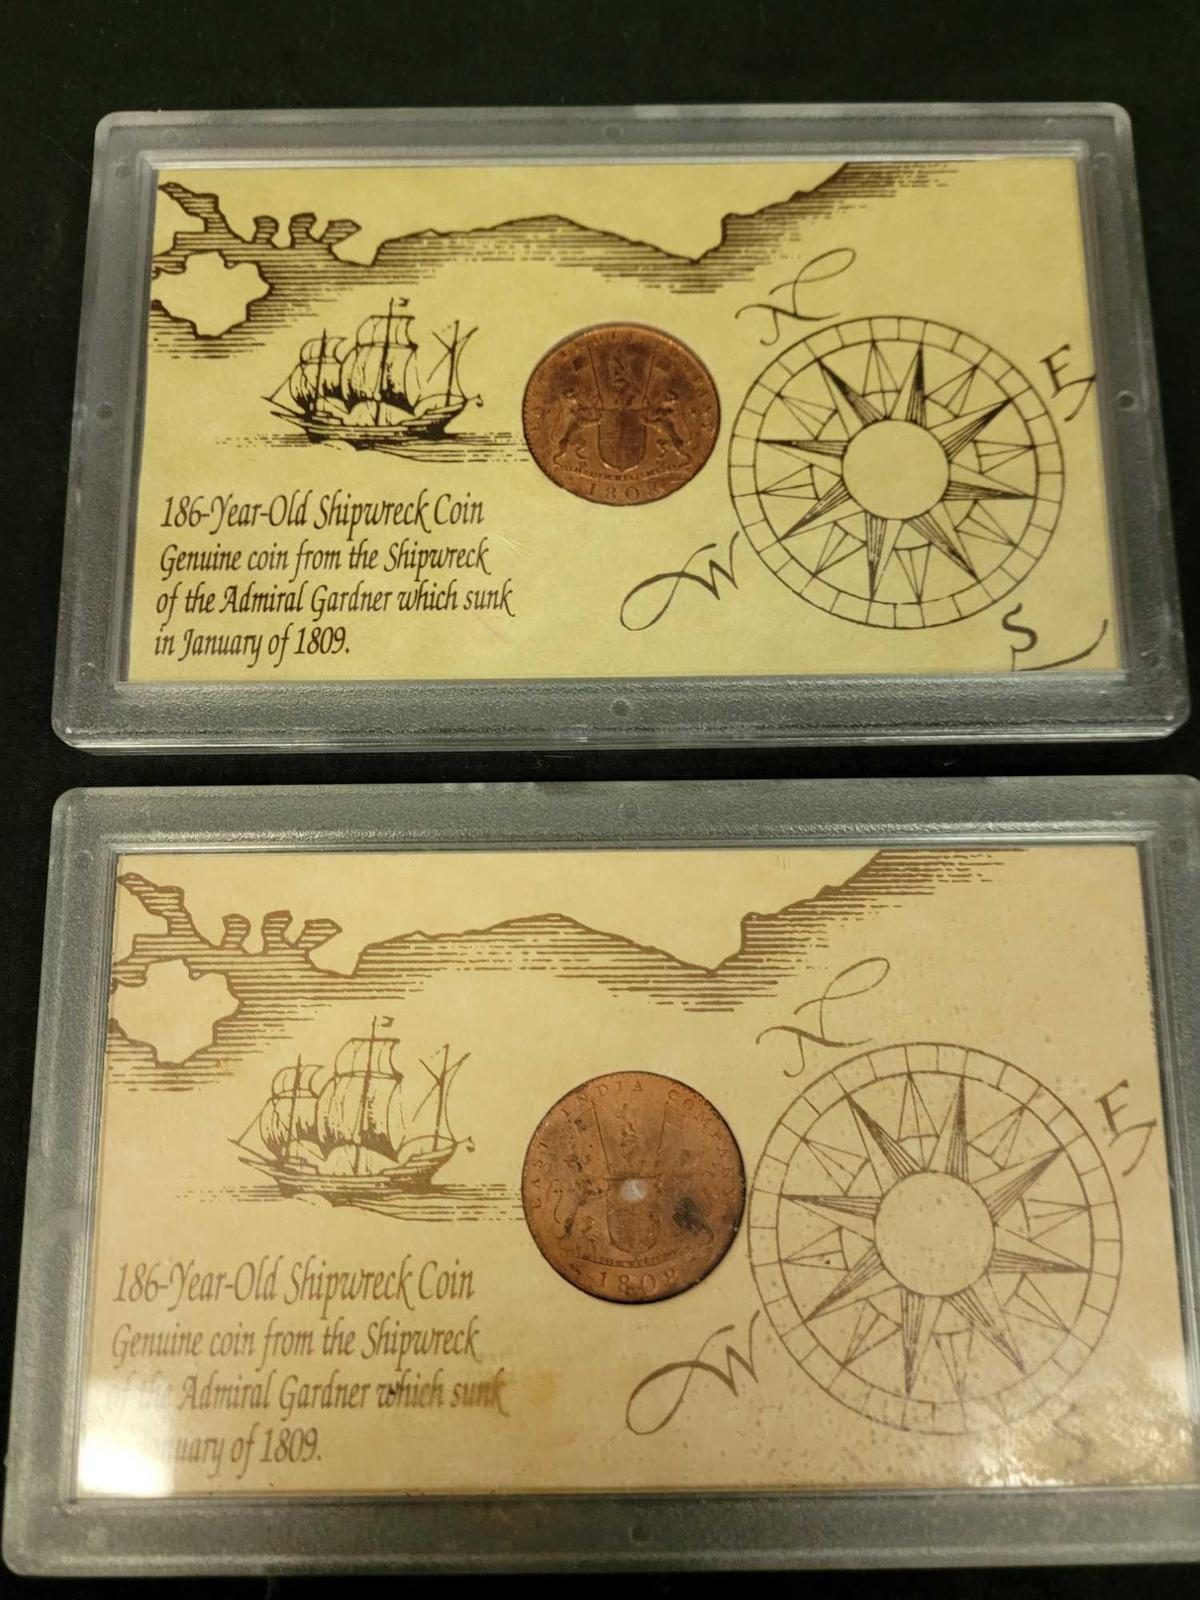 2 186 year old shipwreck Coin